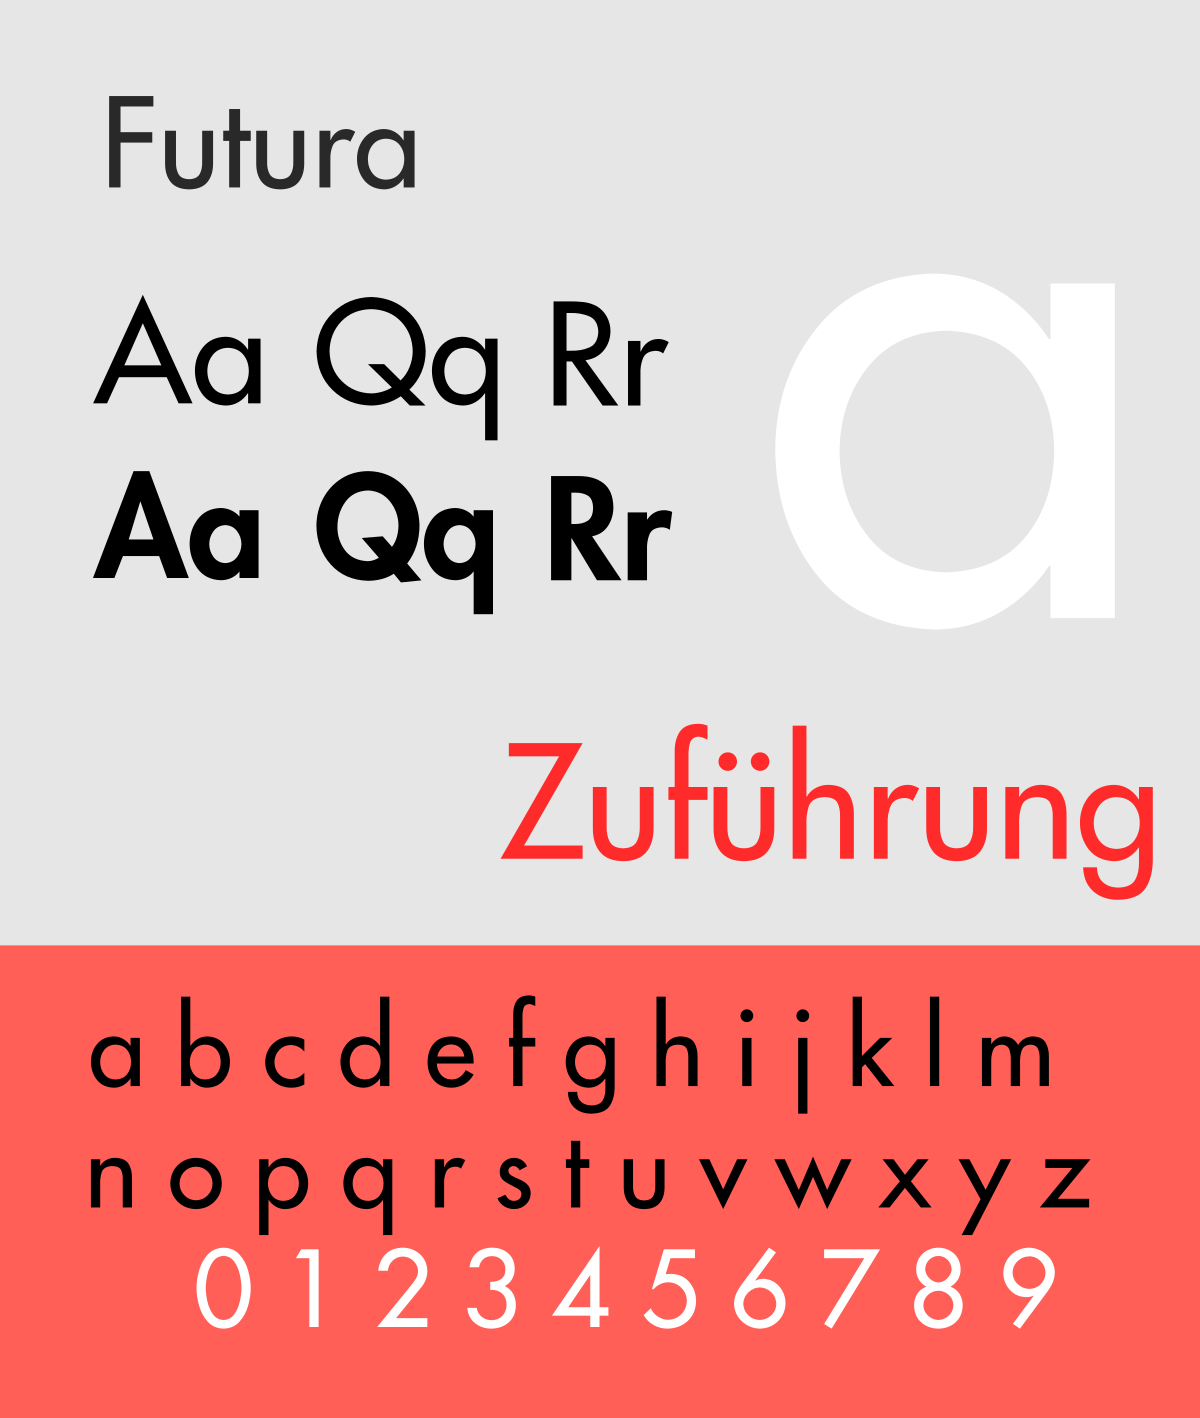 Futura (typeface) - Wikipedia